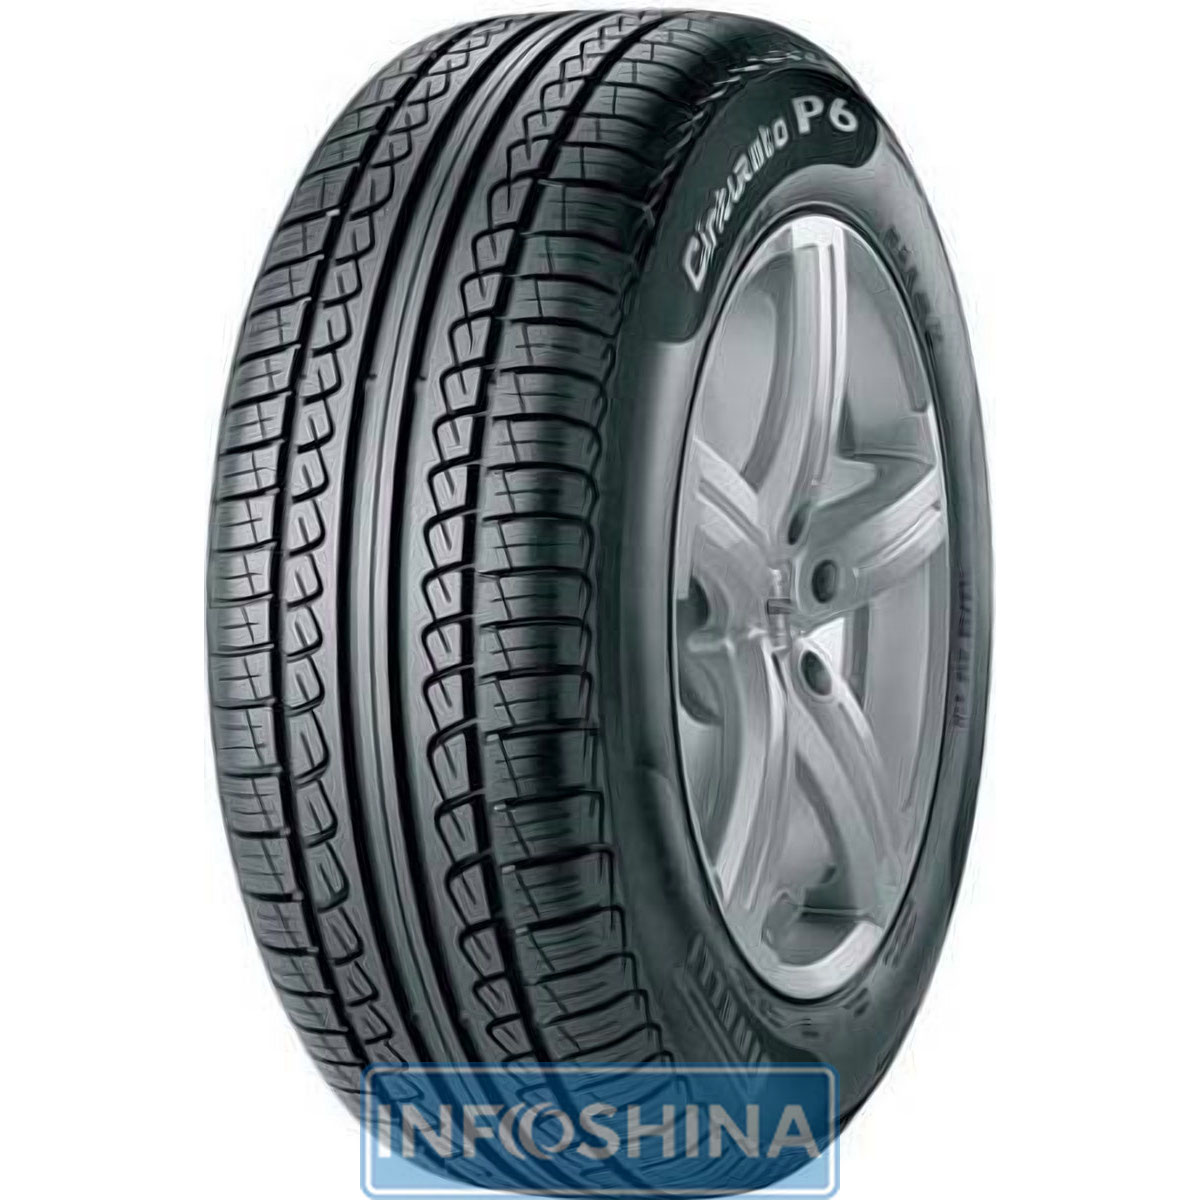 Купить шины Pirelli Cinturato P6 155/60 R15 74H